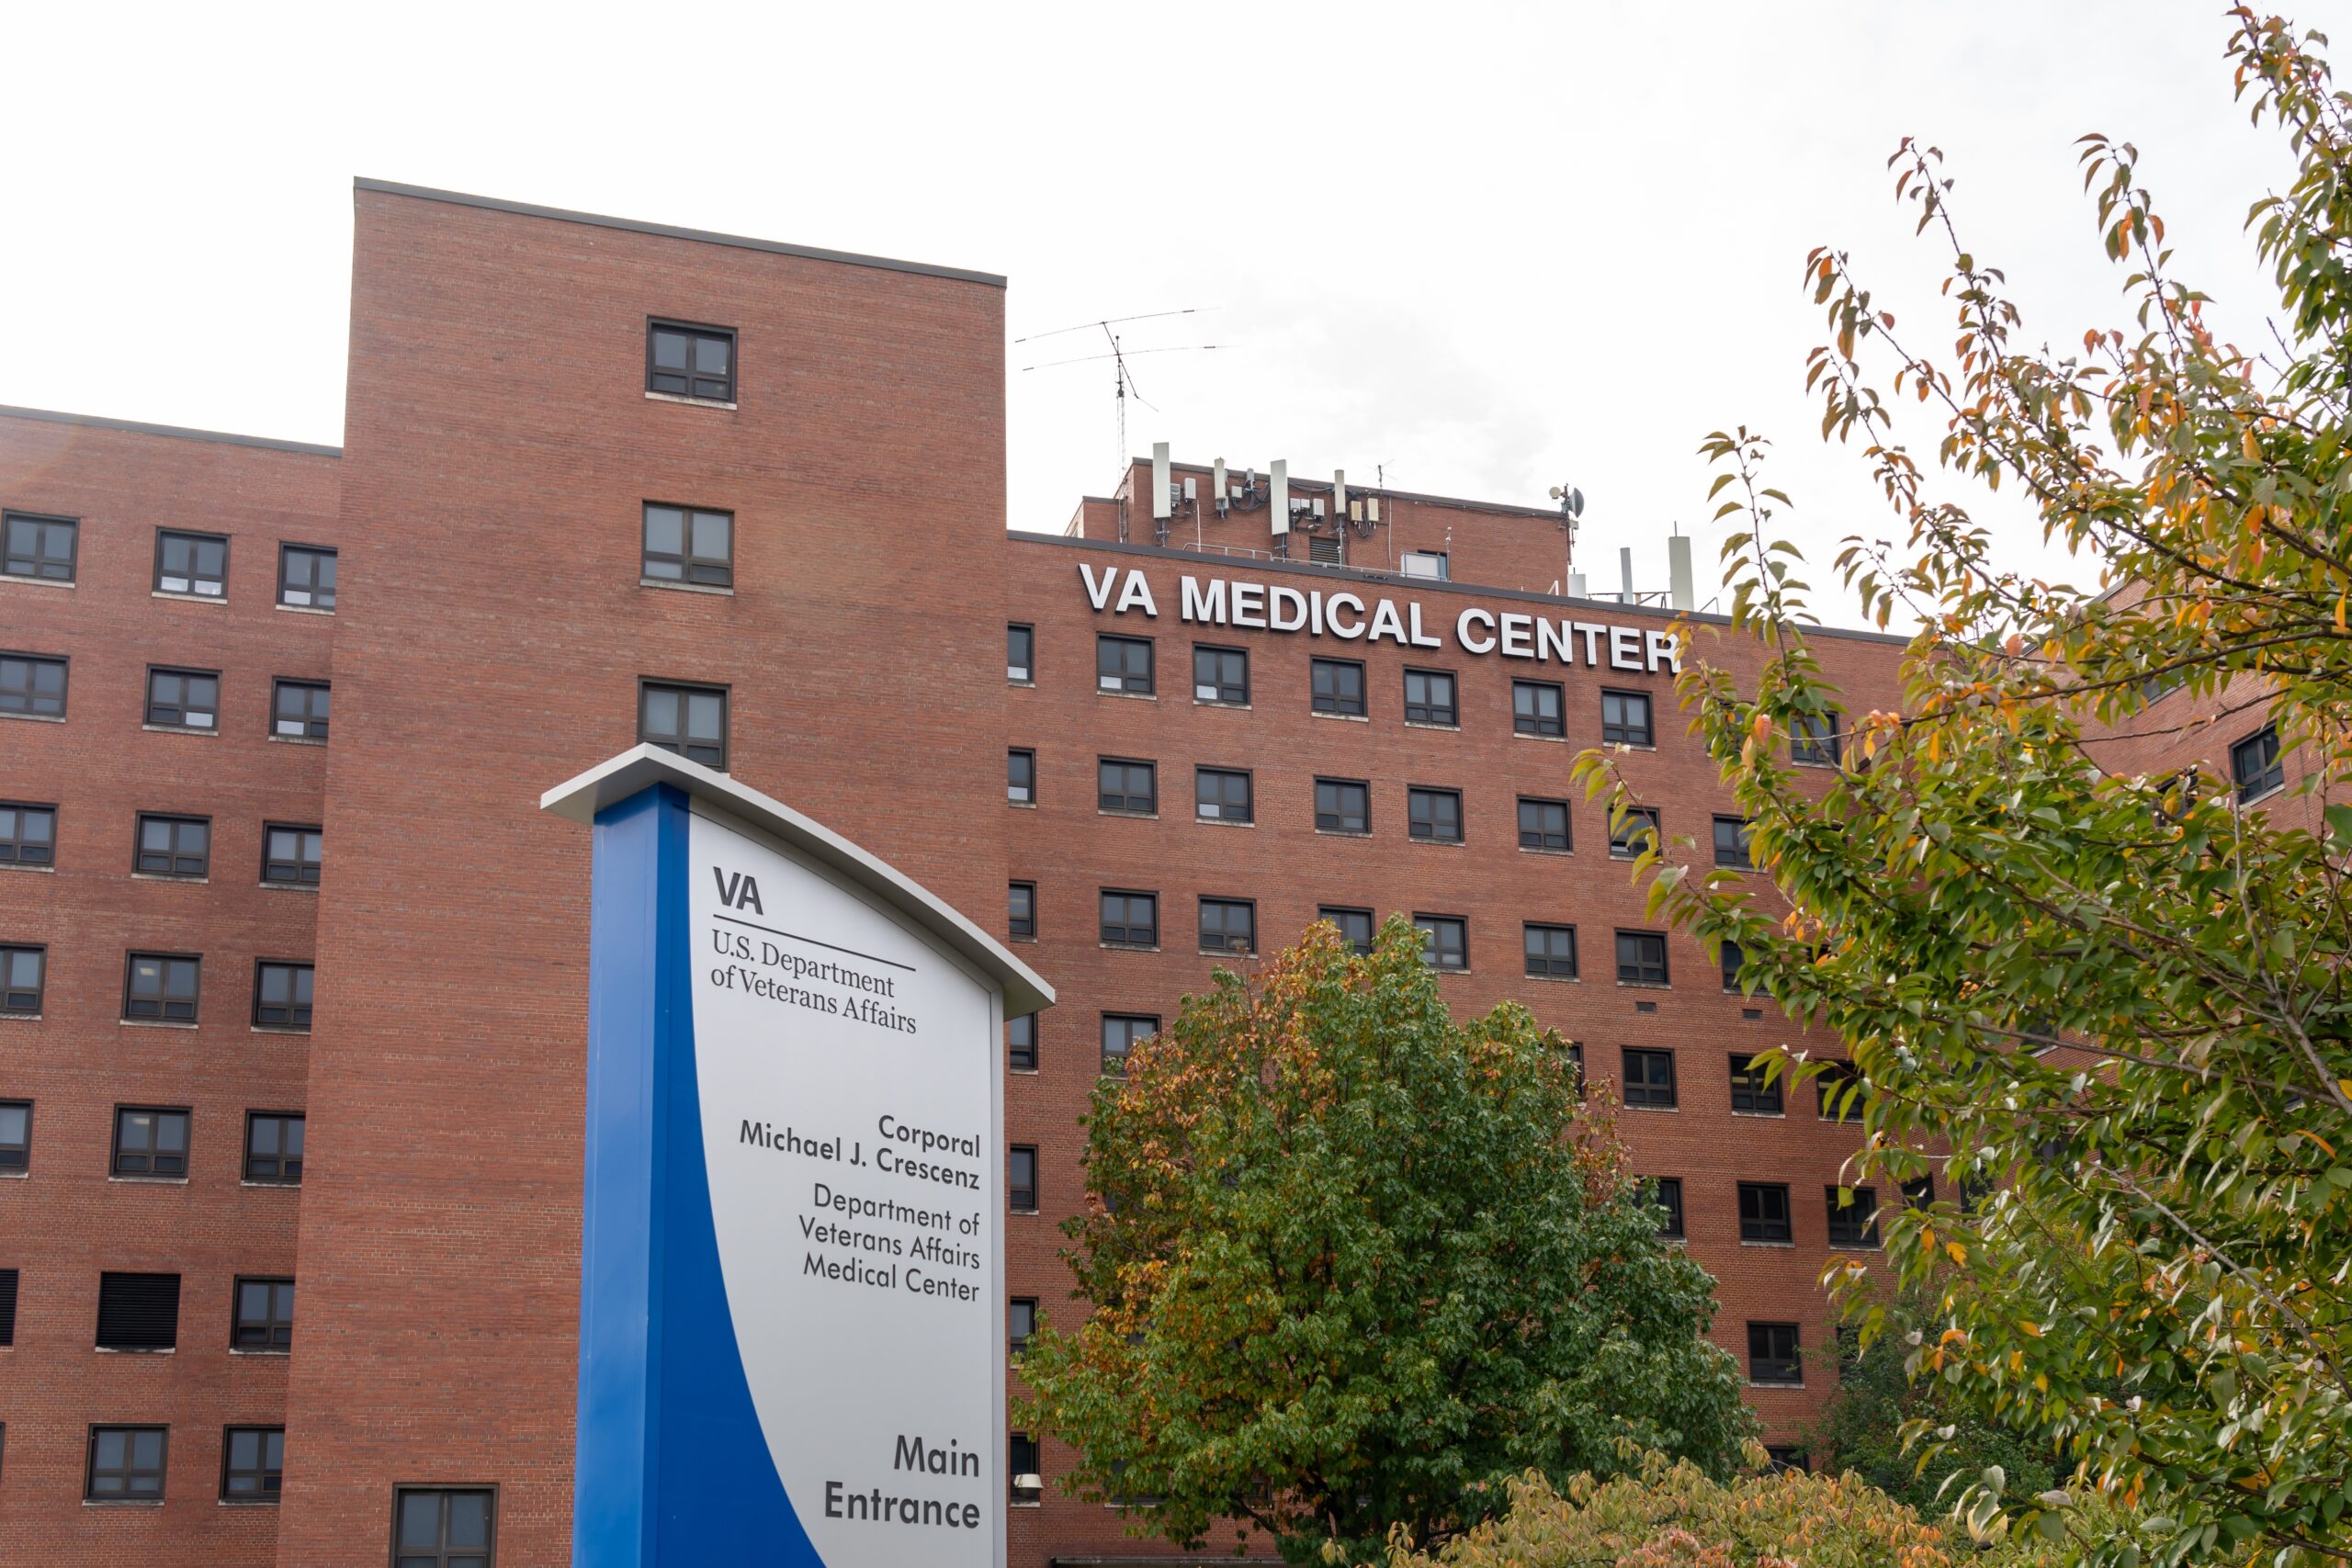 Outside view of VA medical center